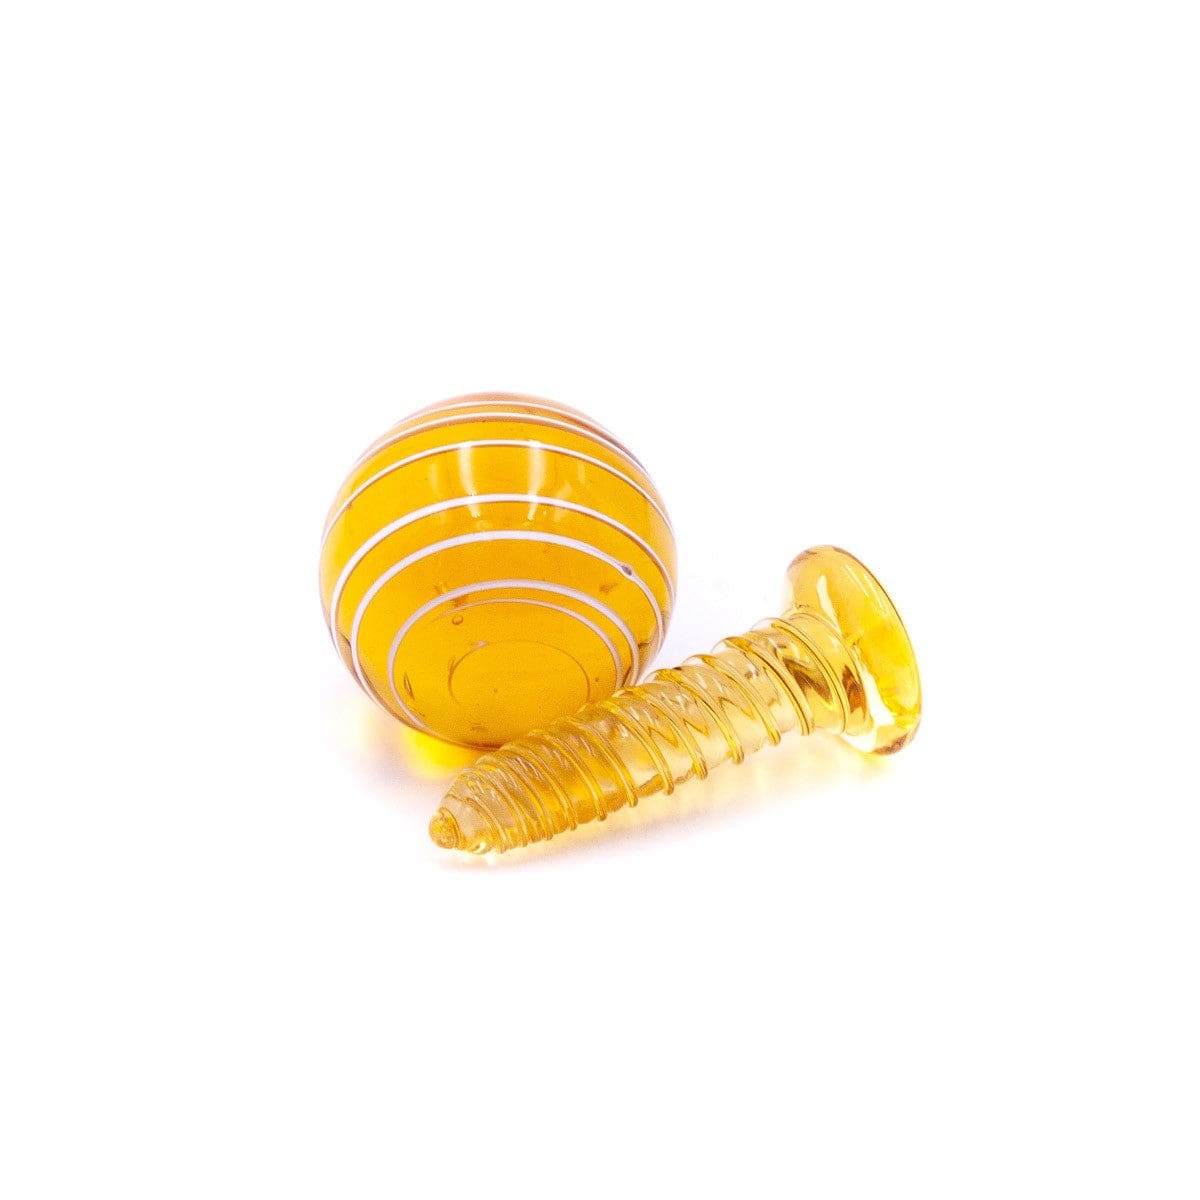 The Stash Shack Carb Cap Yellow Glass Terp Screw and Marble Slurper Cap Set